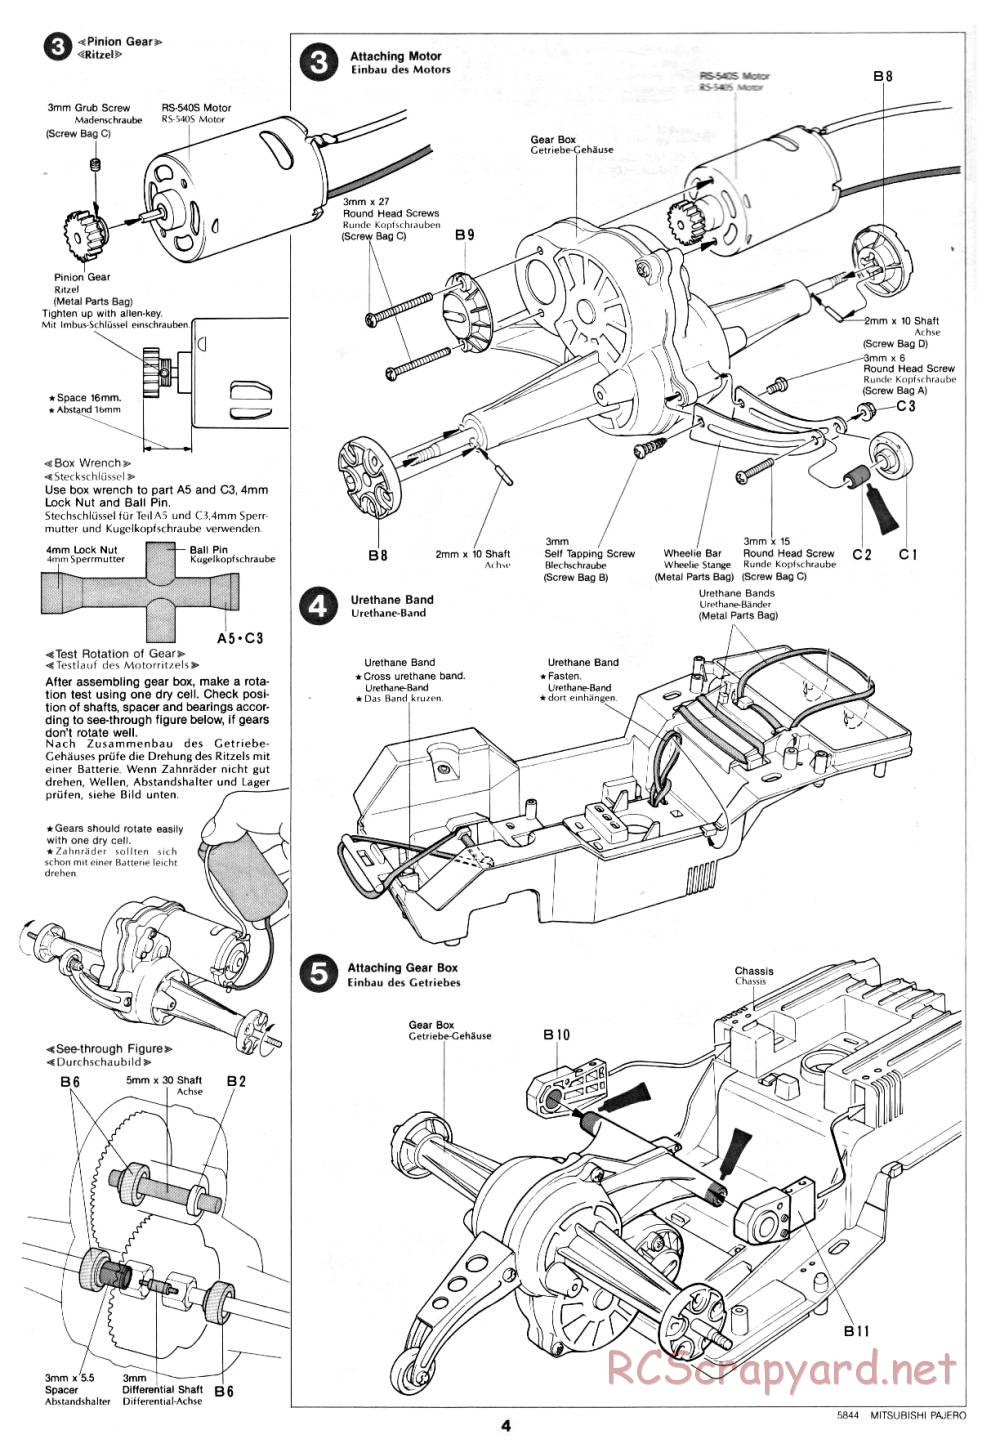 Tamiya - Mitsubishi Pajero - 58044 - Manual - Page 4